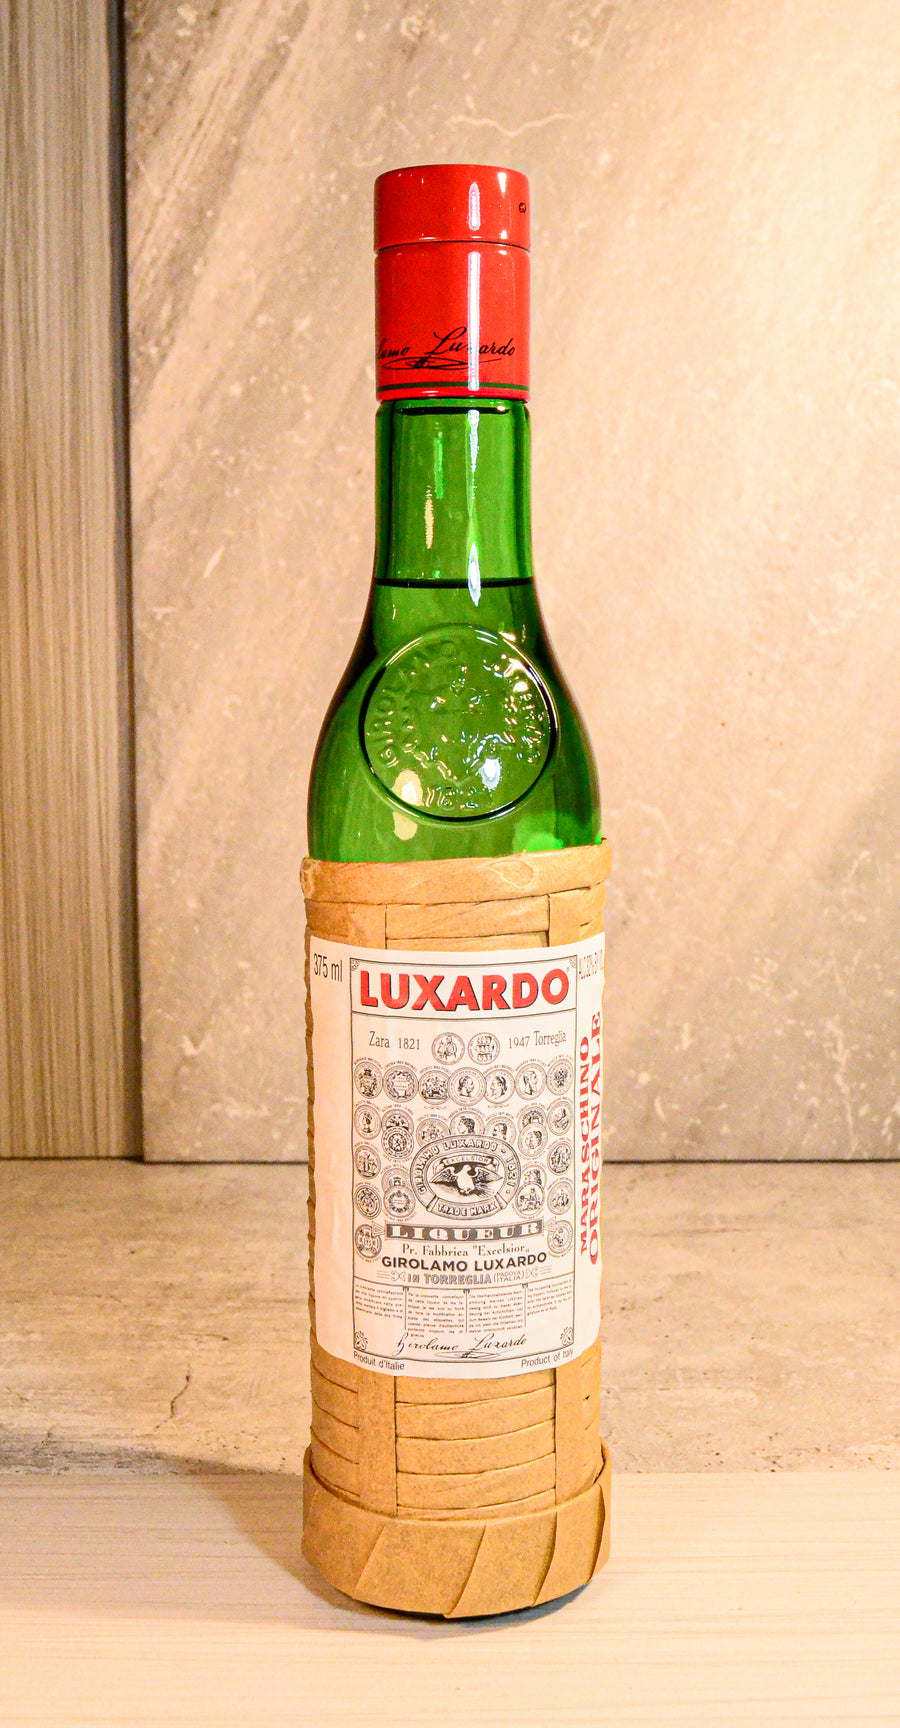 Luxardo, Maraschino Liqueur